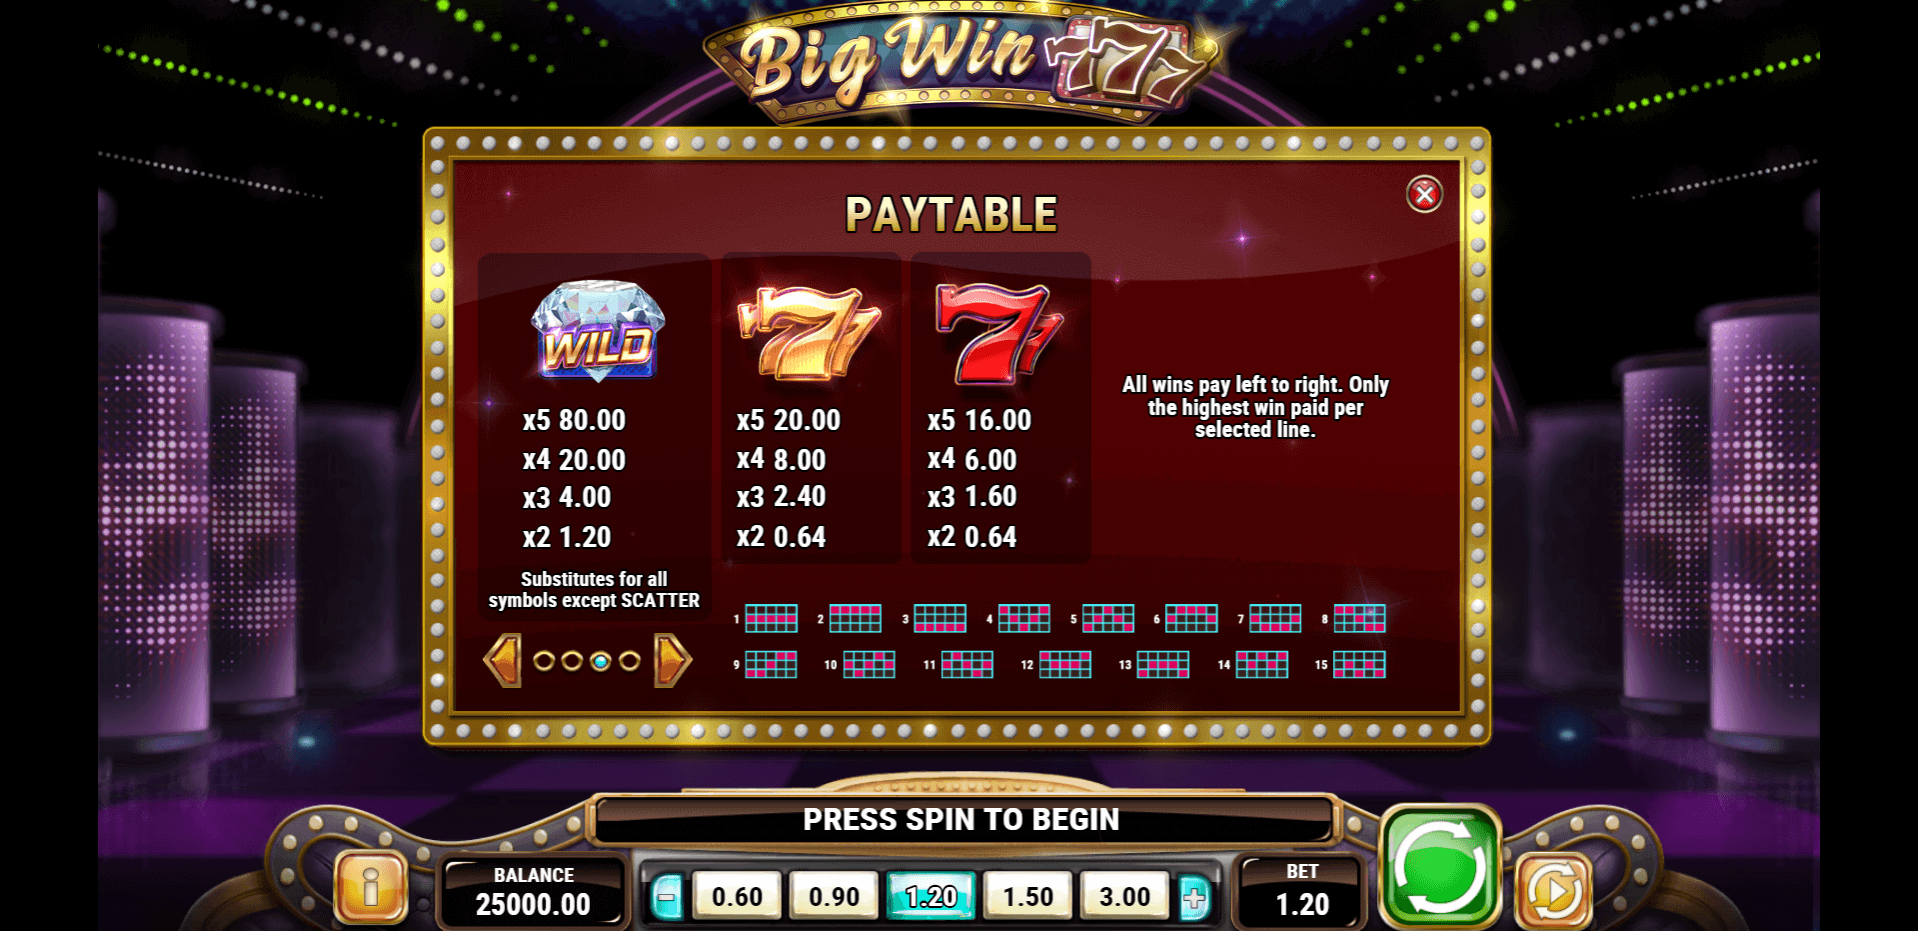 Big Win 777 Slot Machine ᗎ Play FREE Casino Game Online by Play’n GO